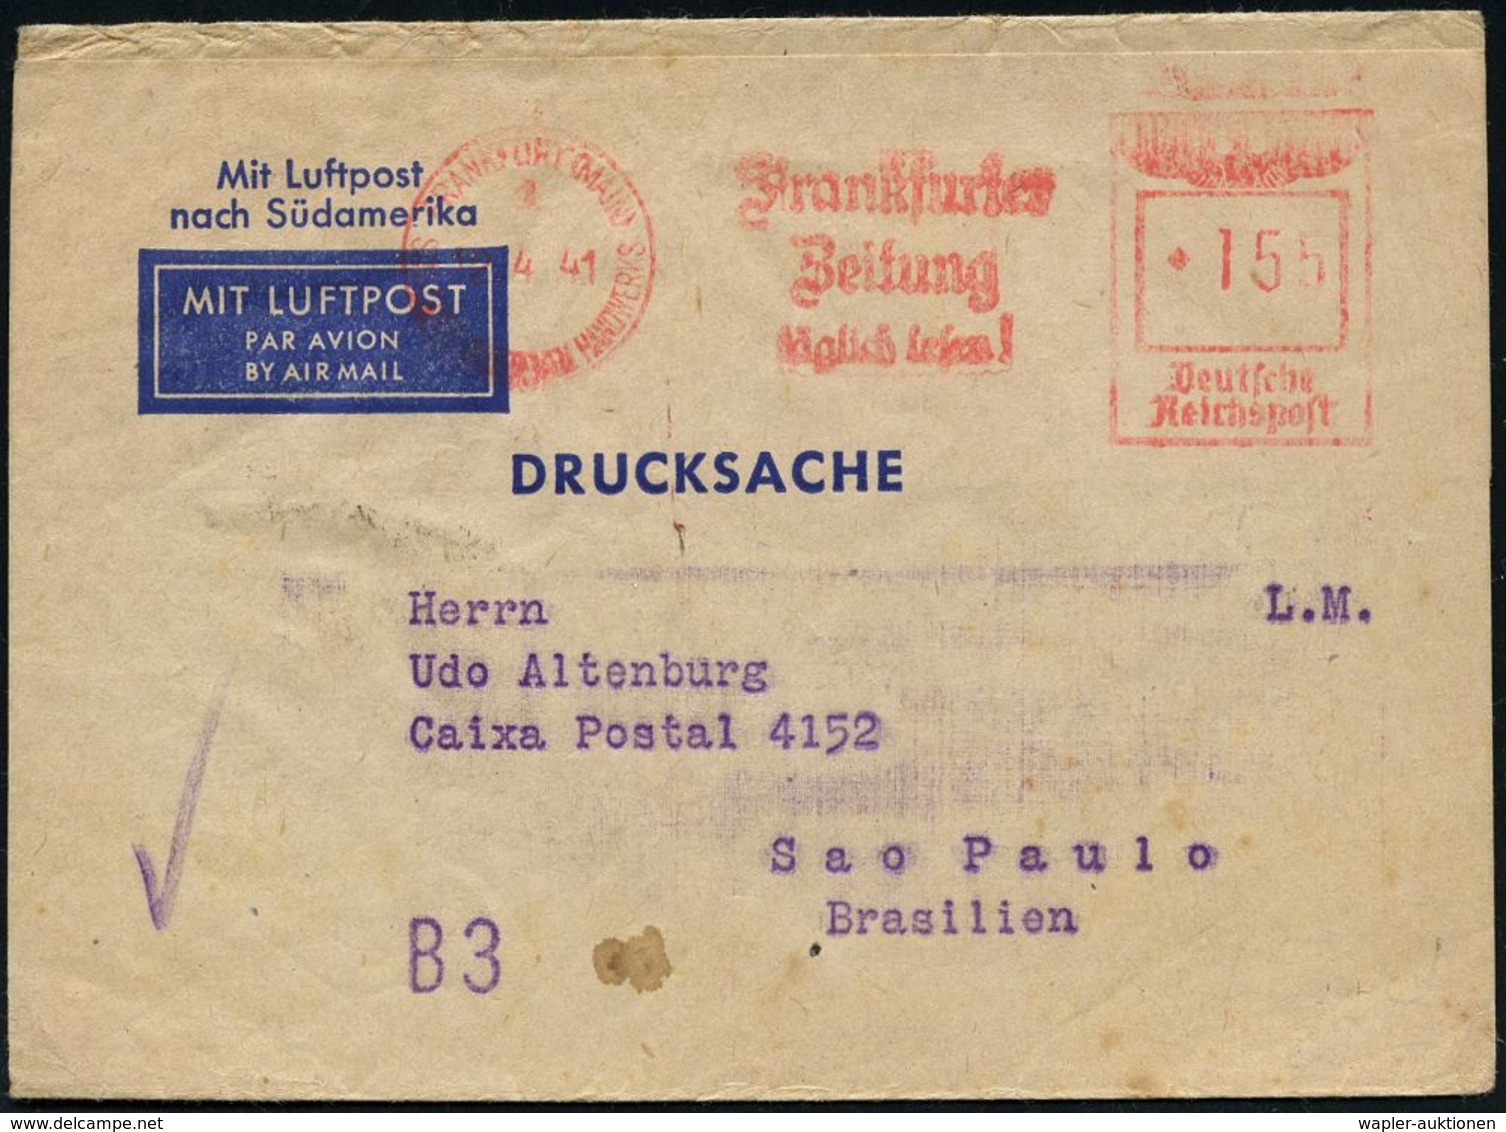 FLUG- & KATAPULTPOST SÜDAMERIKA : FRANKFURT (MAIN)1/ SDH/ Frankfurter/ Zeitung/ Täglich Lesen! 1941 (Apr.) AFS 155 Pf. A - Altri (Aria)